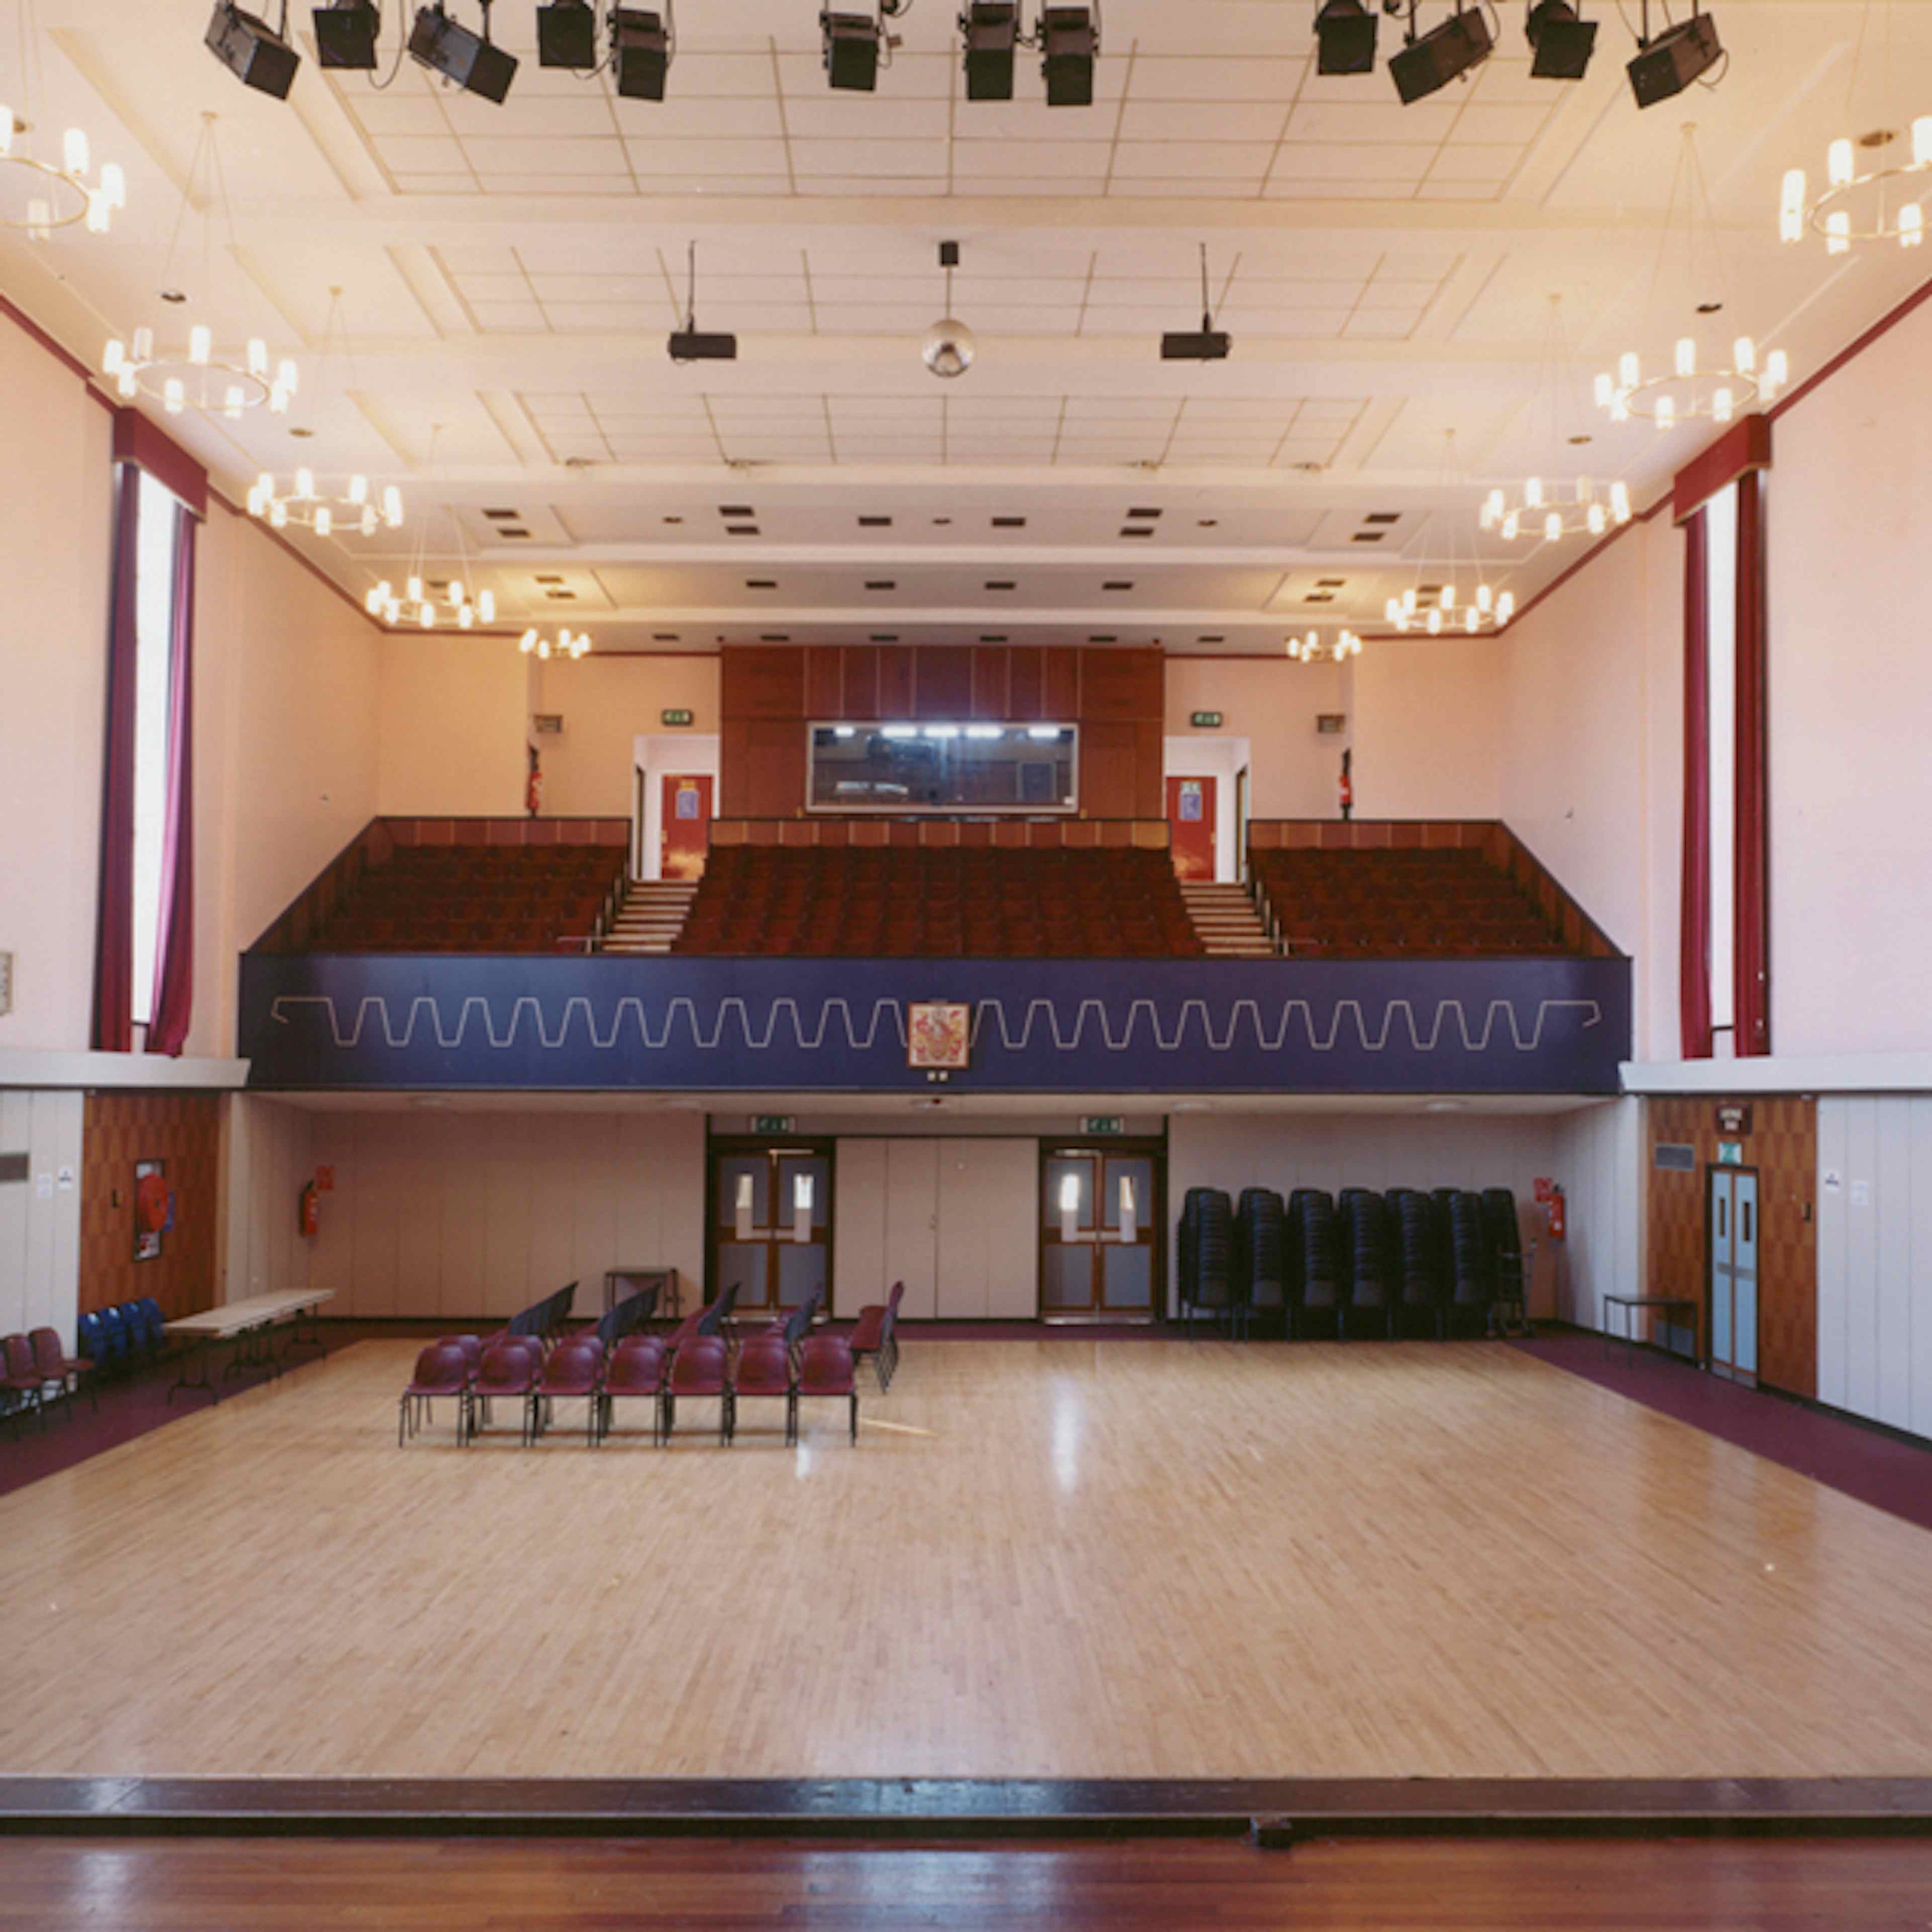 Brierley Hill Civic Hall - Main Hall image 2